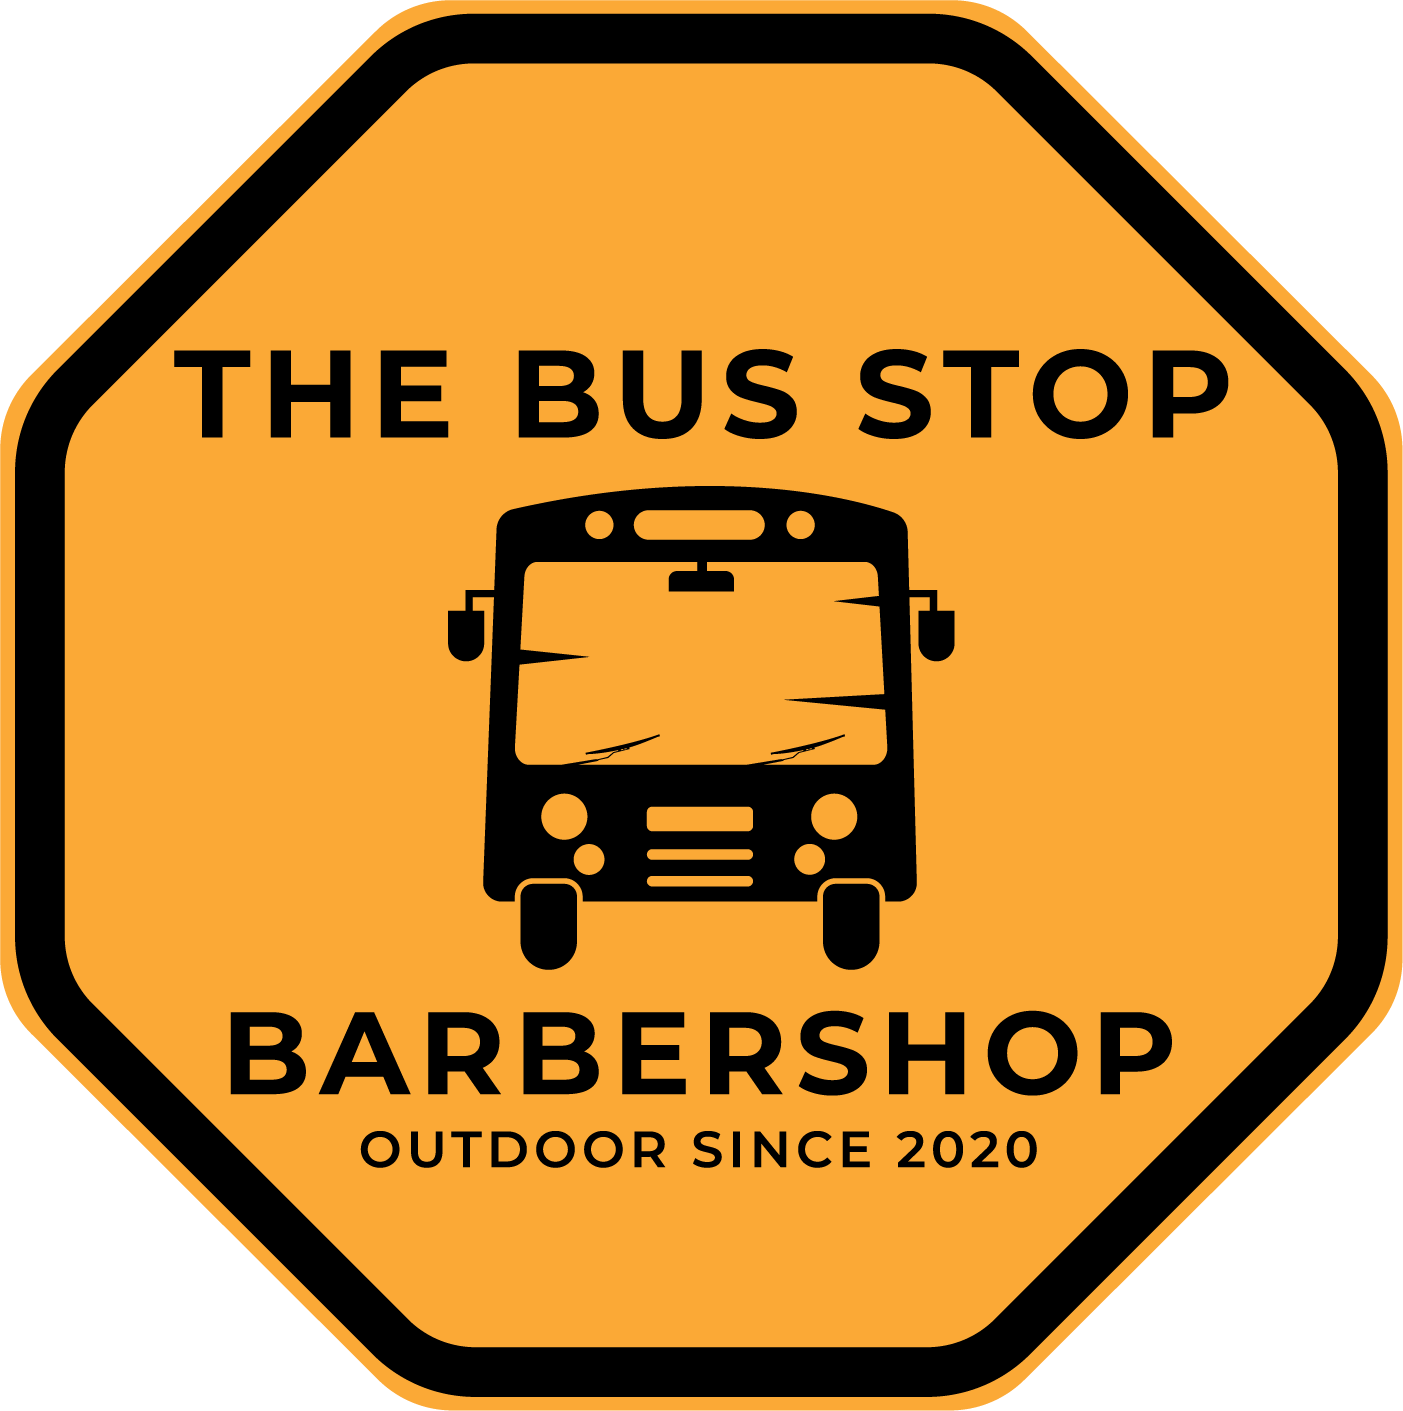 The Bus Stop Barbershop